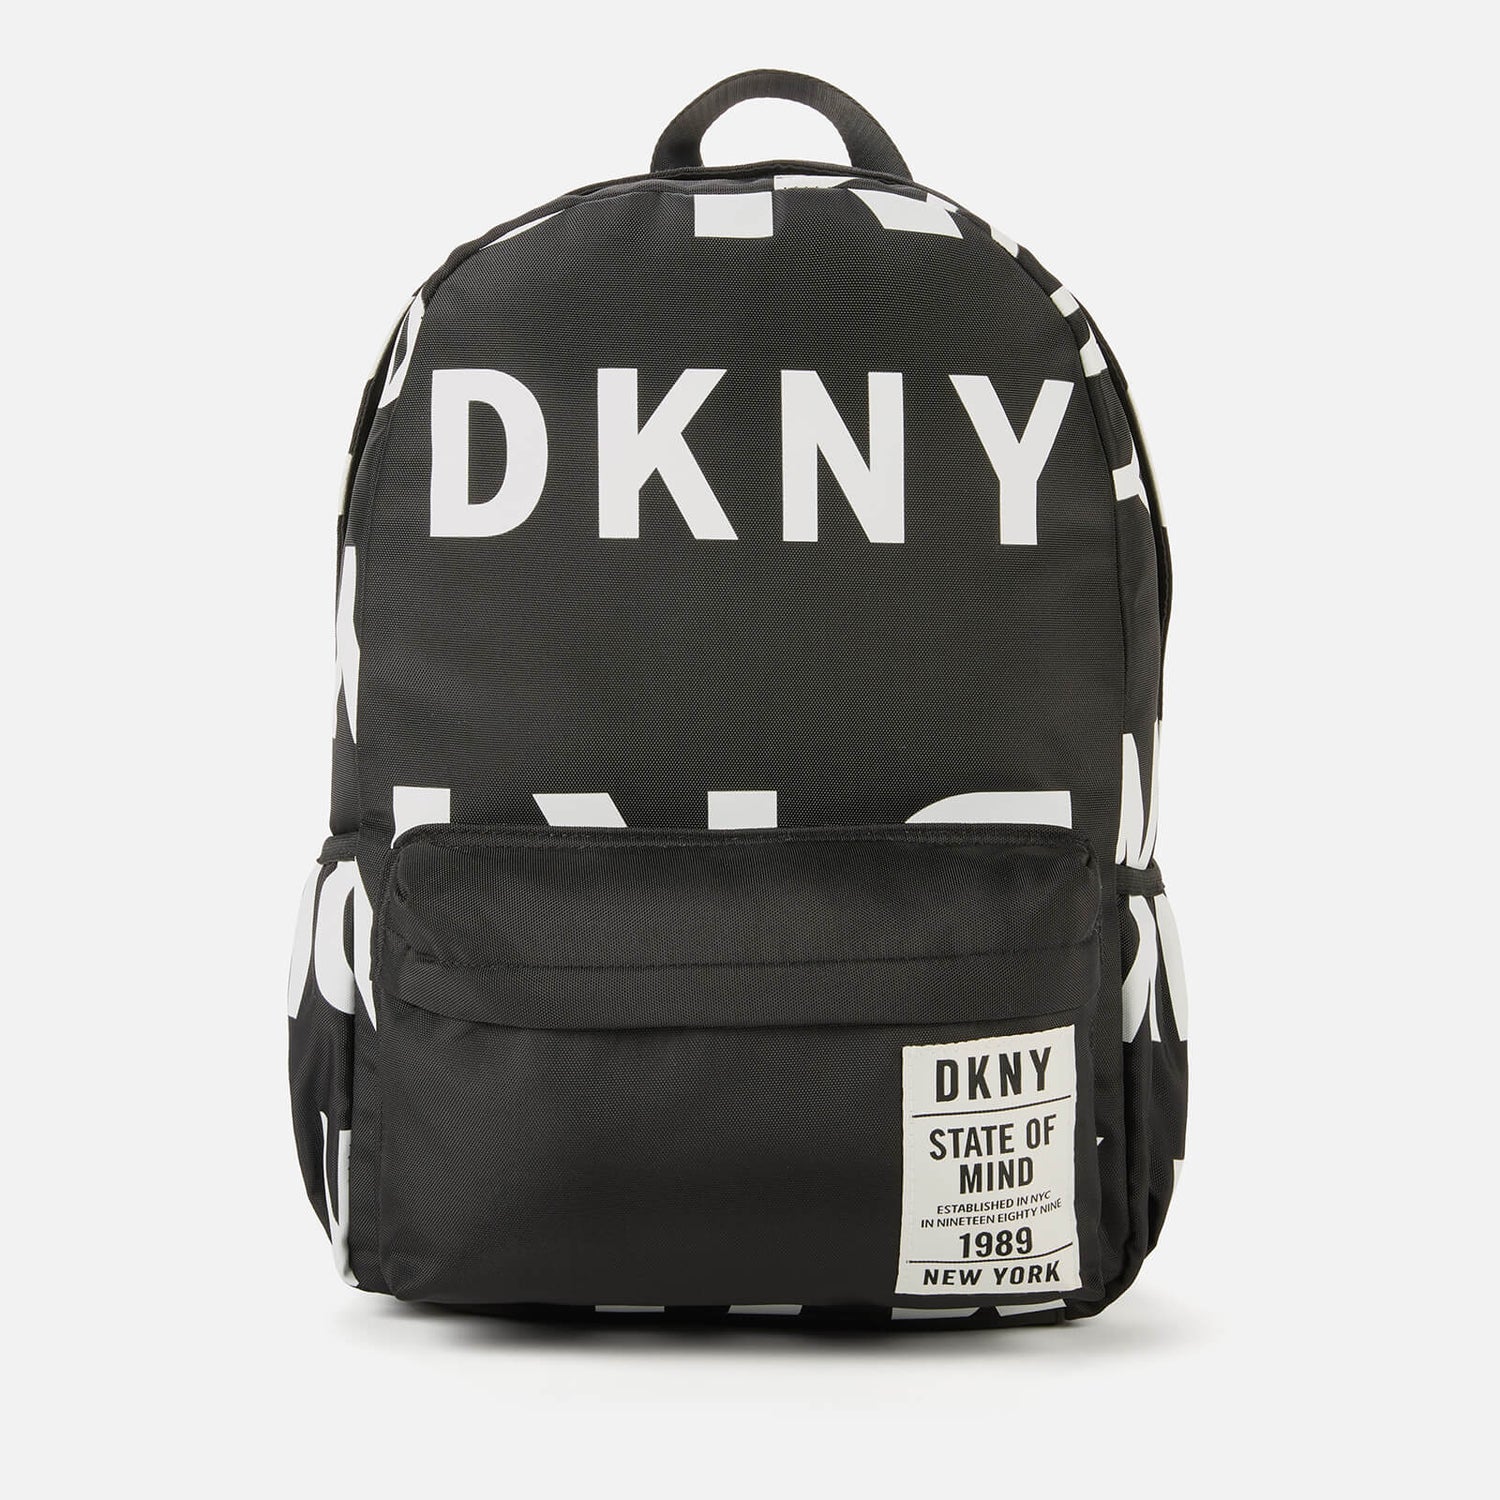 DKNY Girls' Backpack - Black - One Size